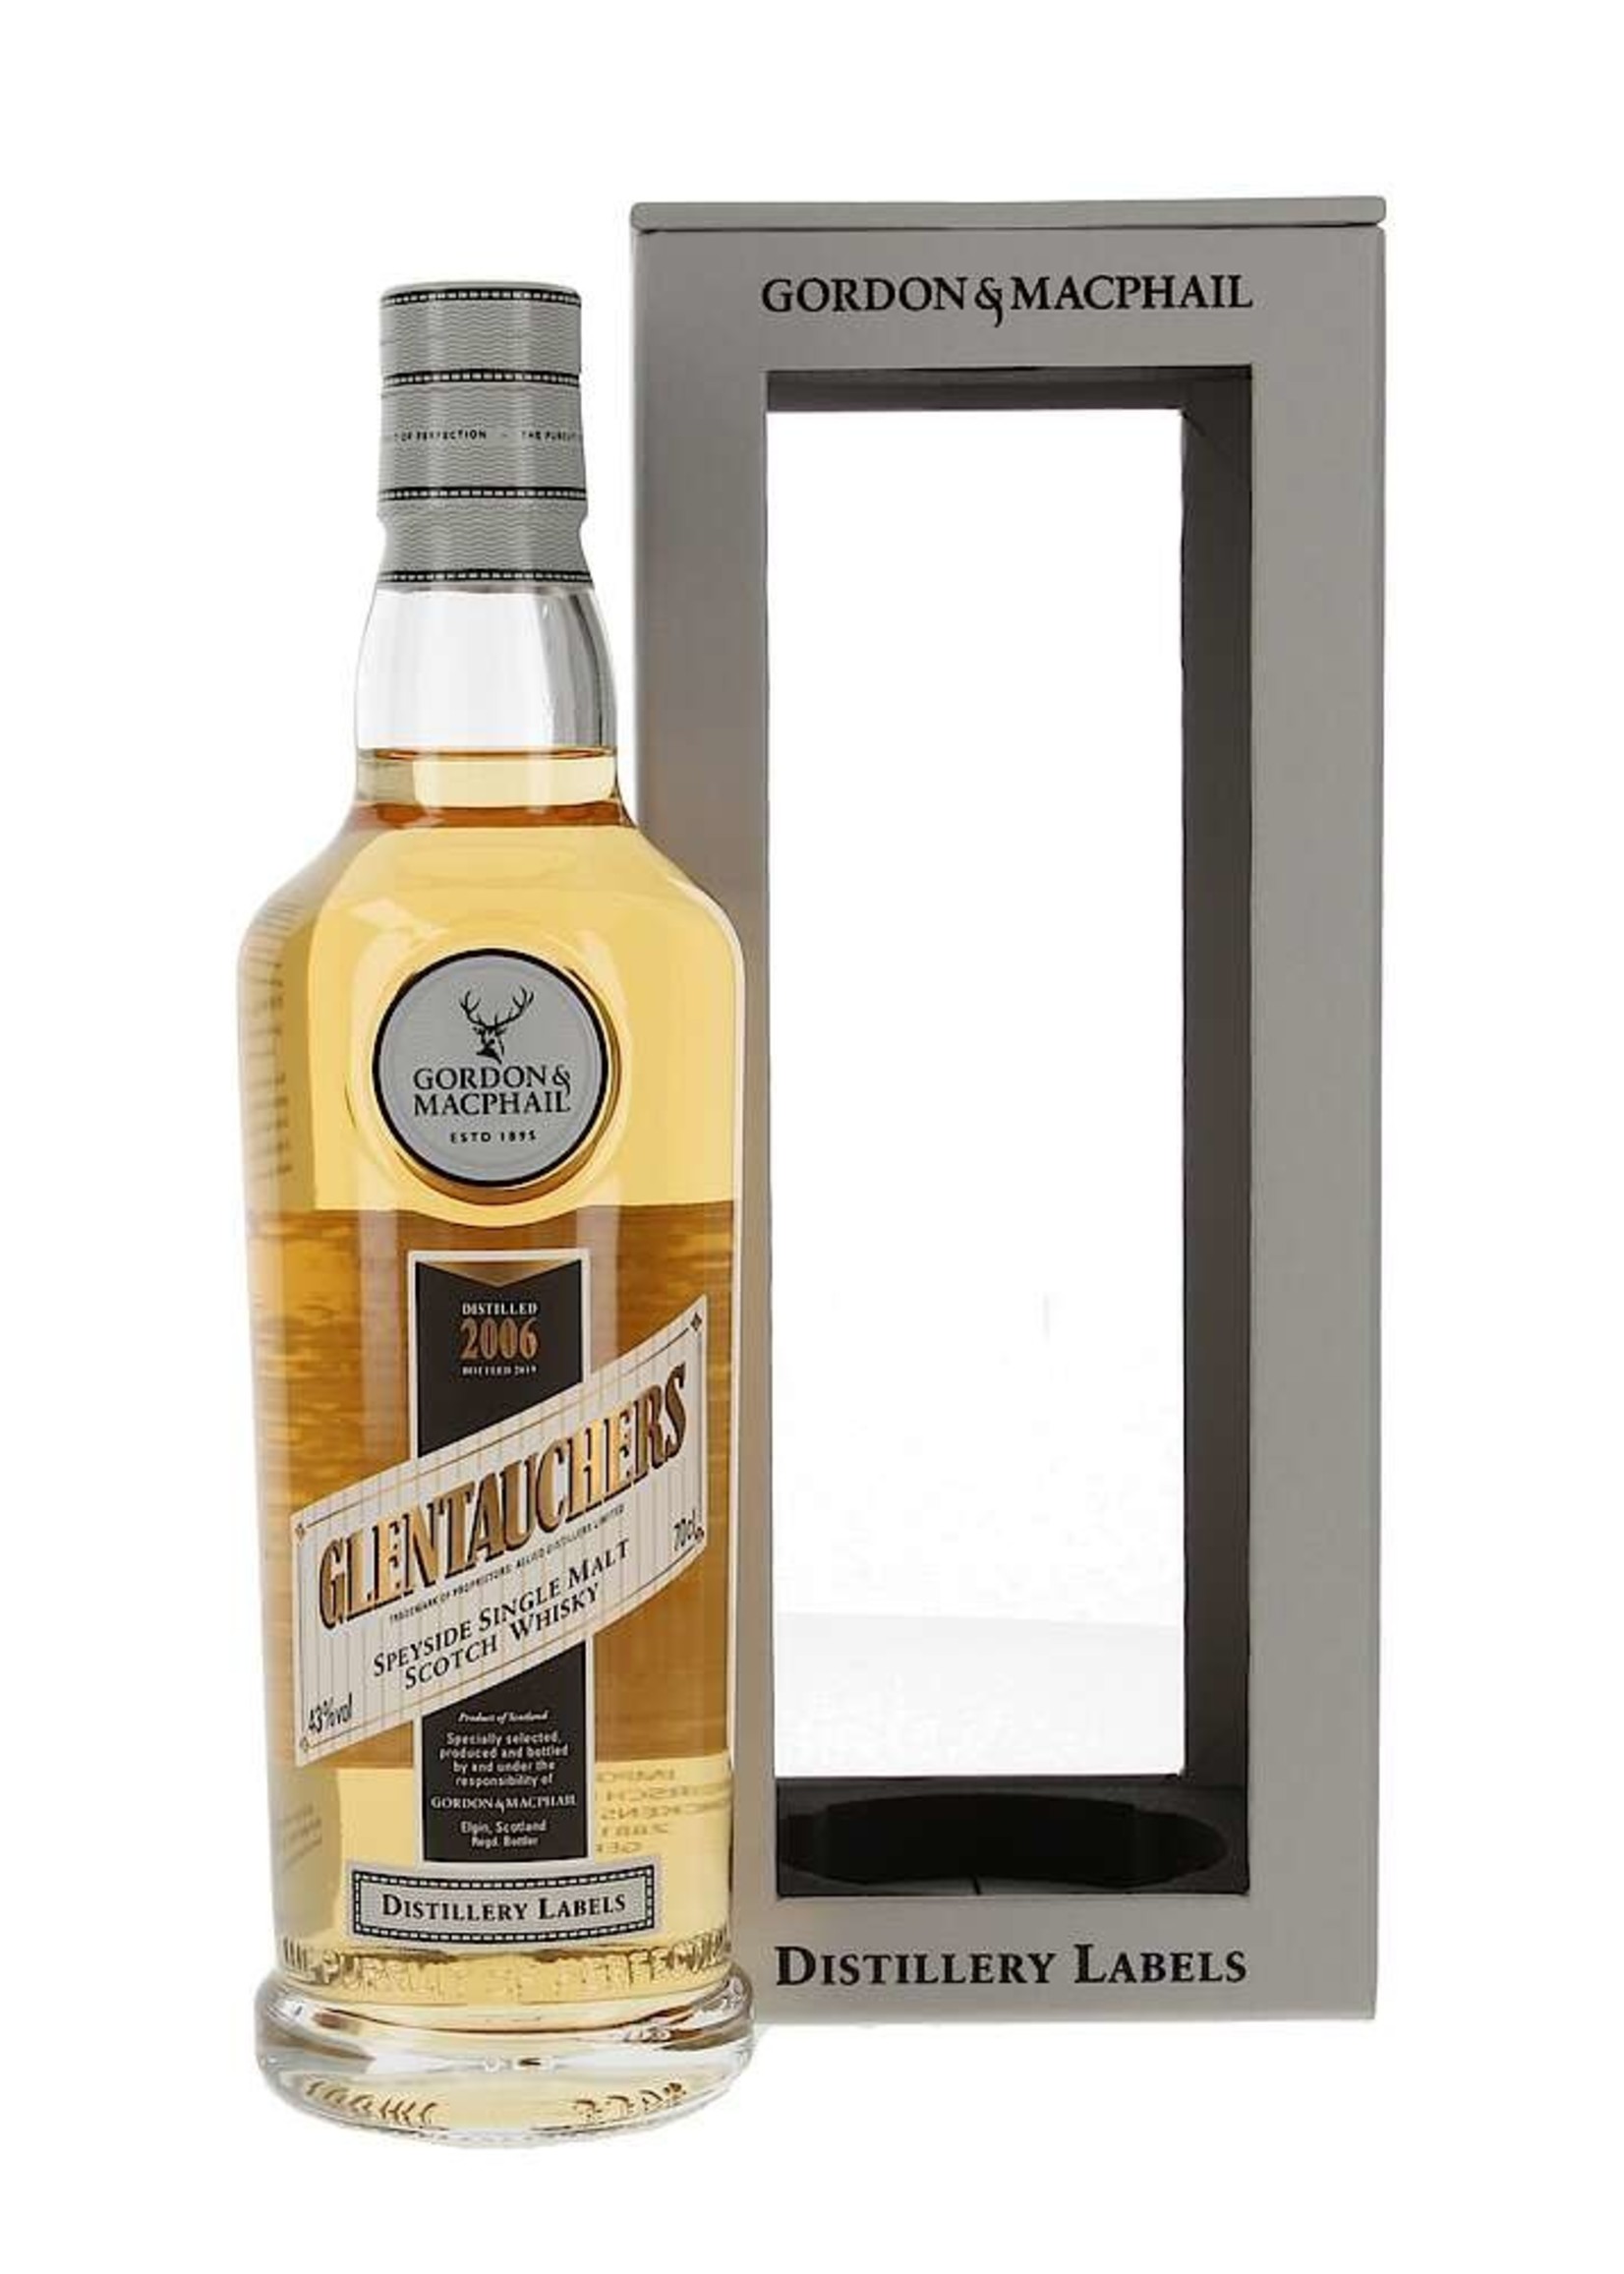 Gordon & Macphail Gordon & Macphail / Glentauchers 13 Year Old Distillery Labels 2006 Single Malt Scotch Whisky 43% abv/ 750 mL